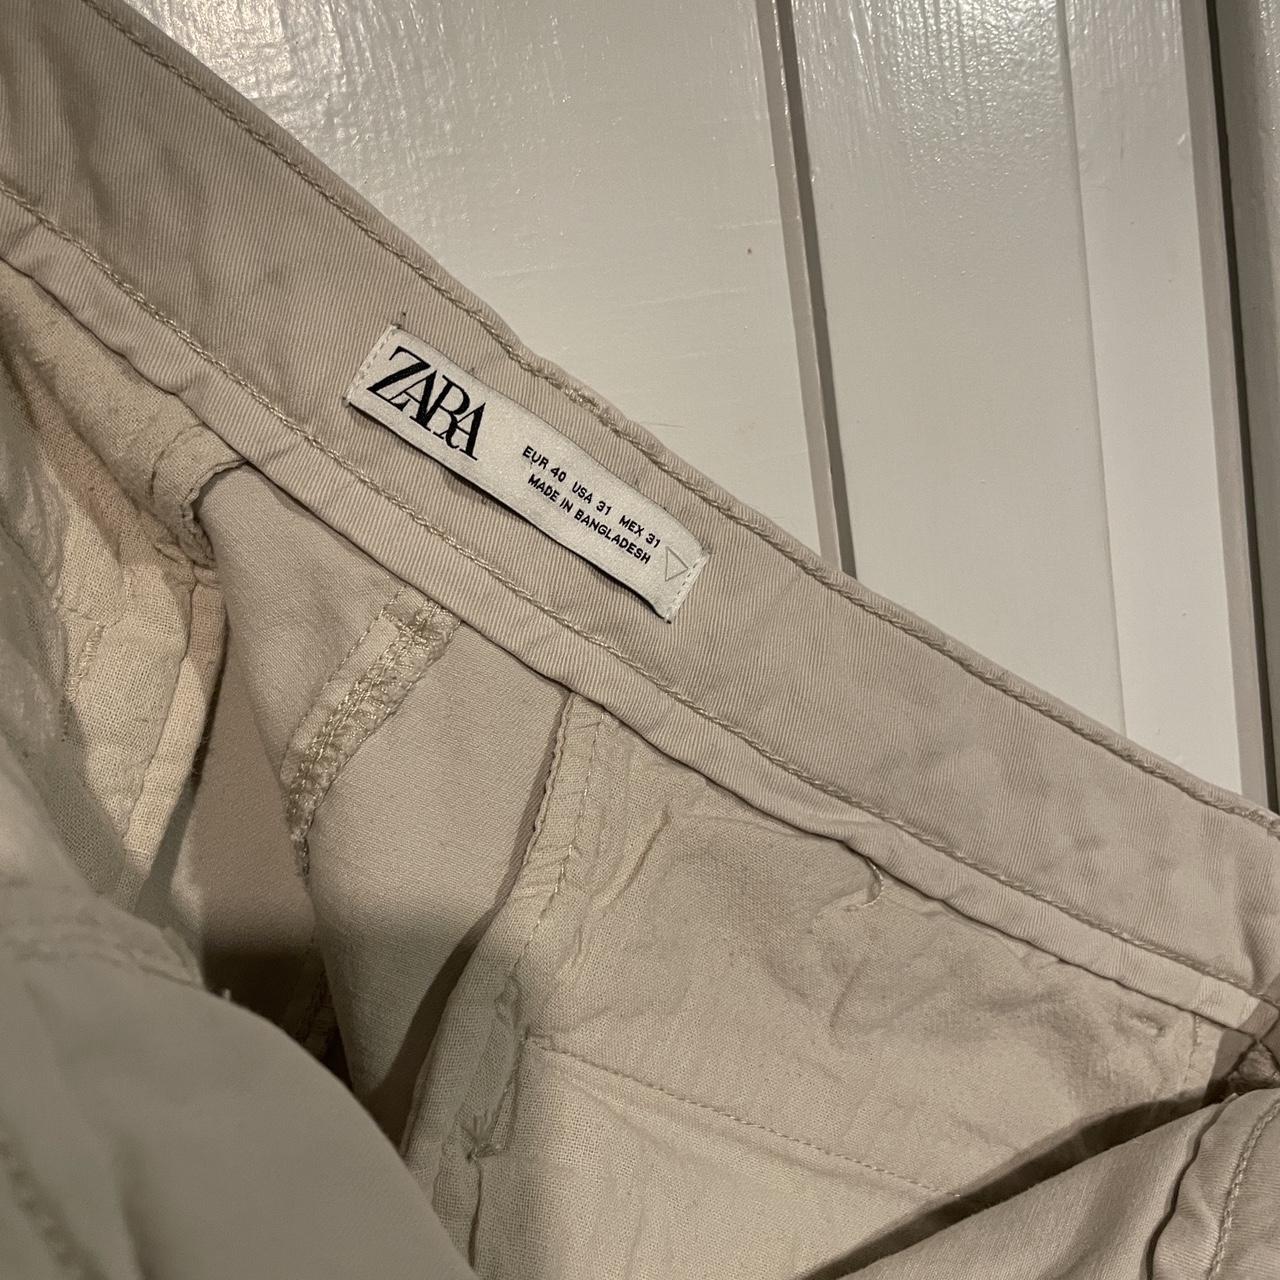 Beige/light tan Zara cargo pants - Depop